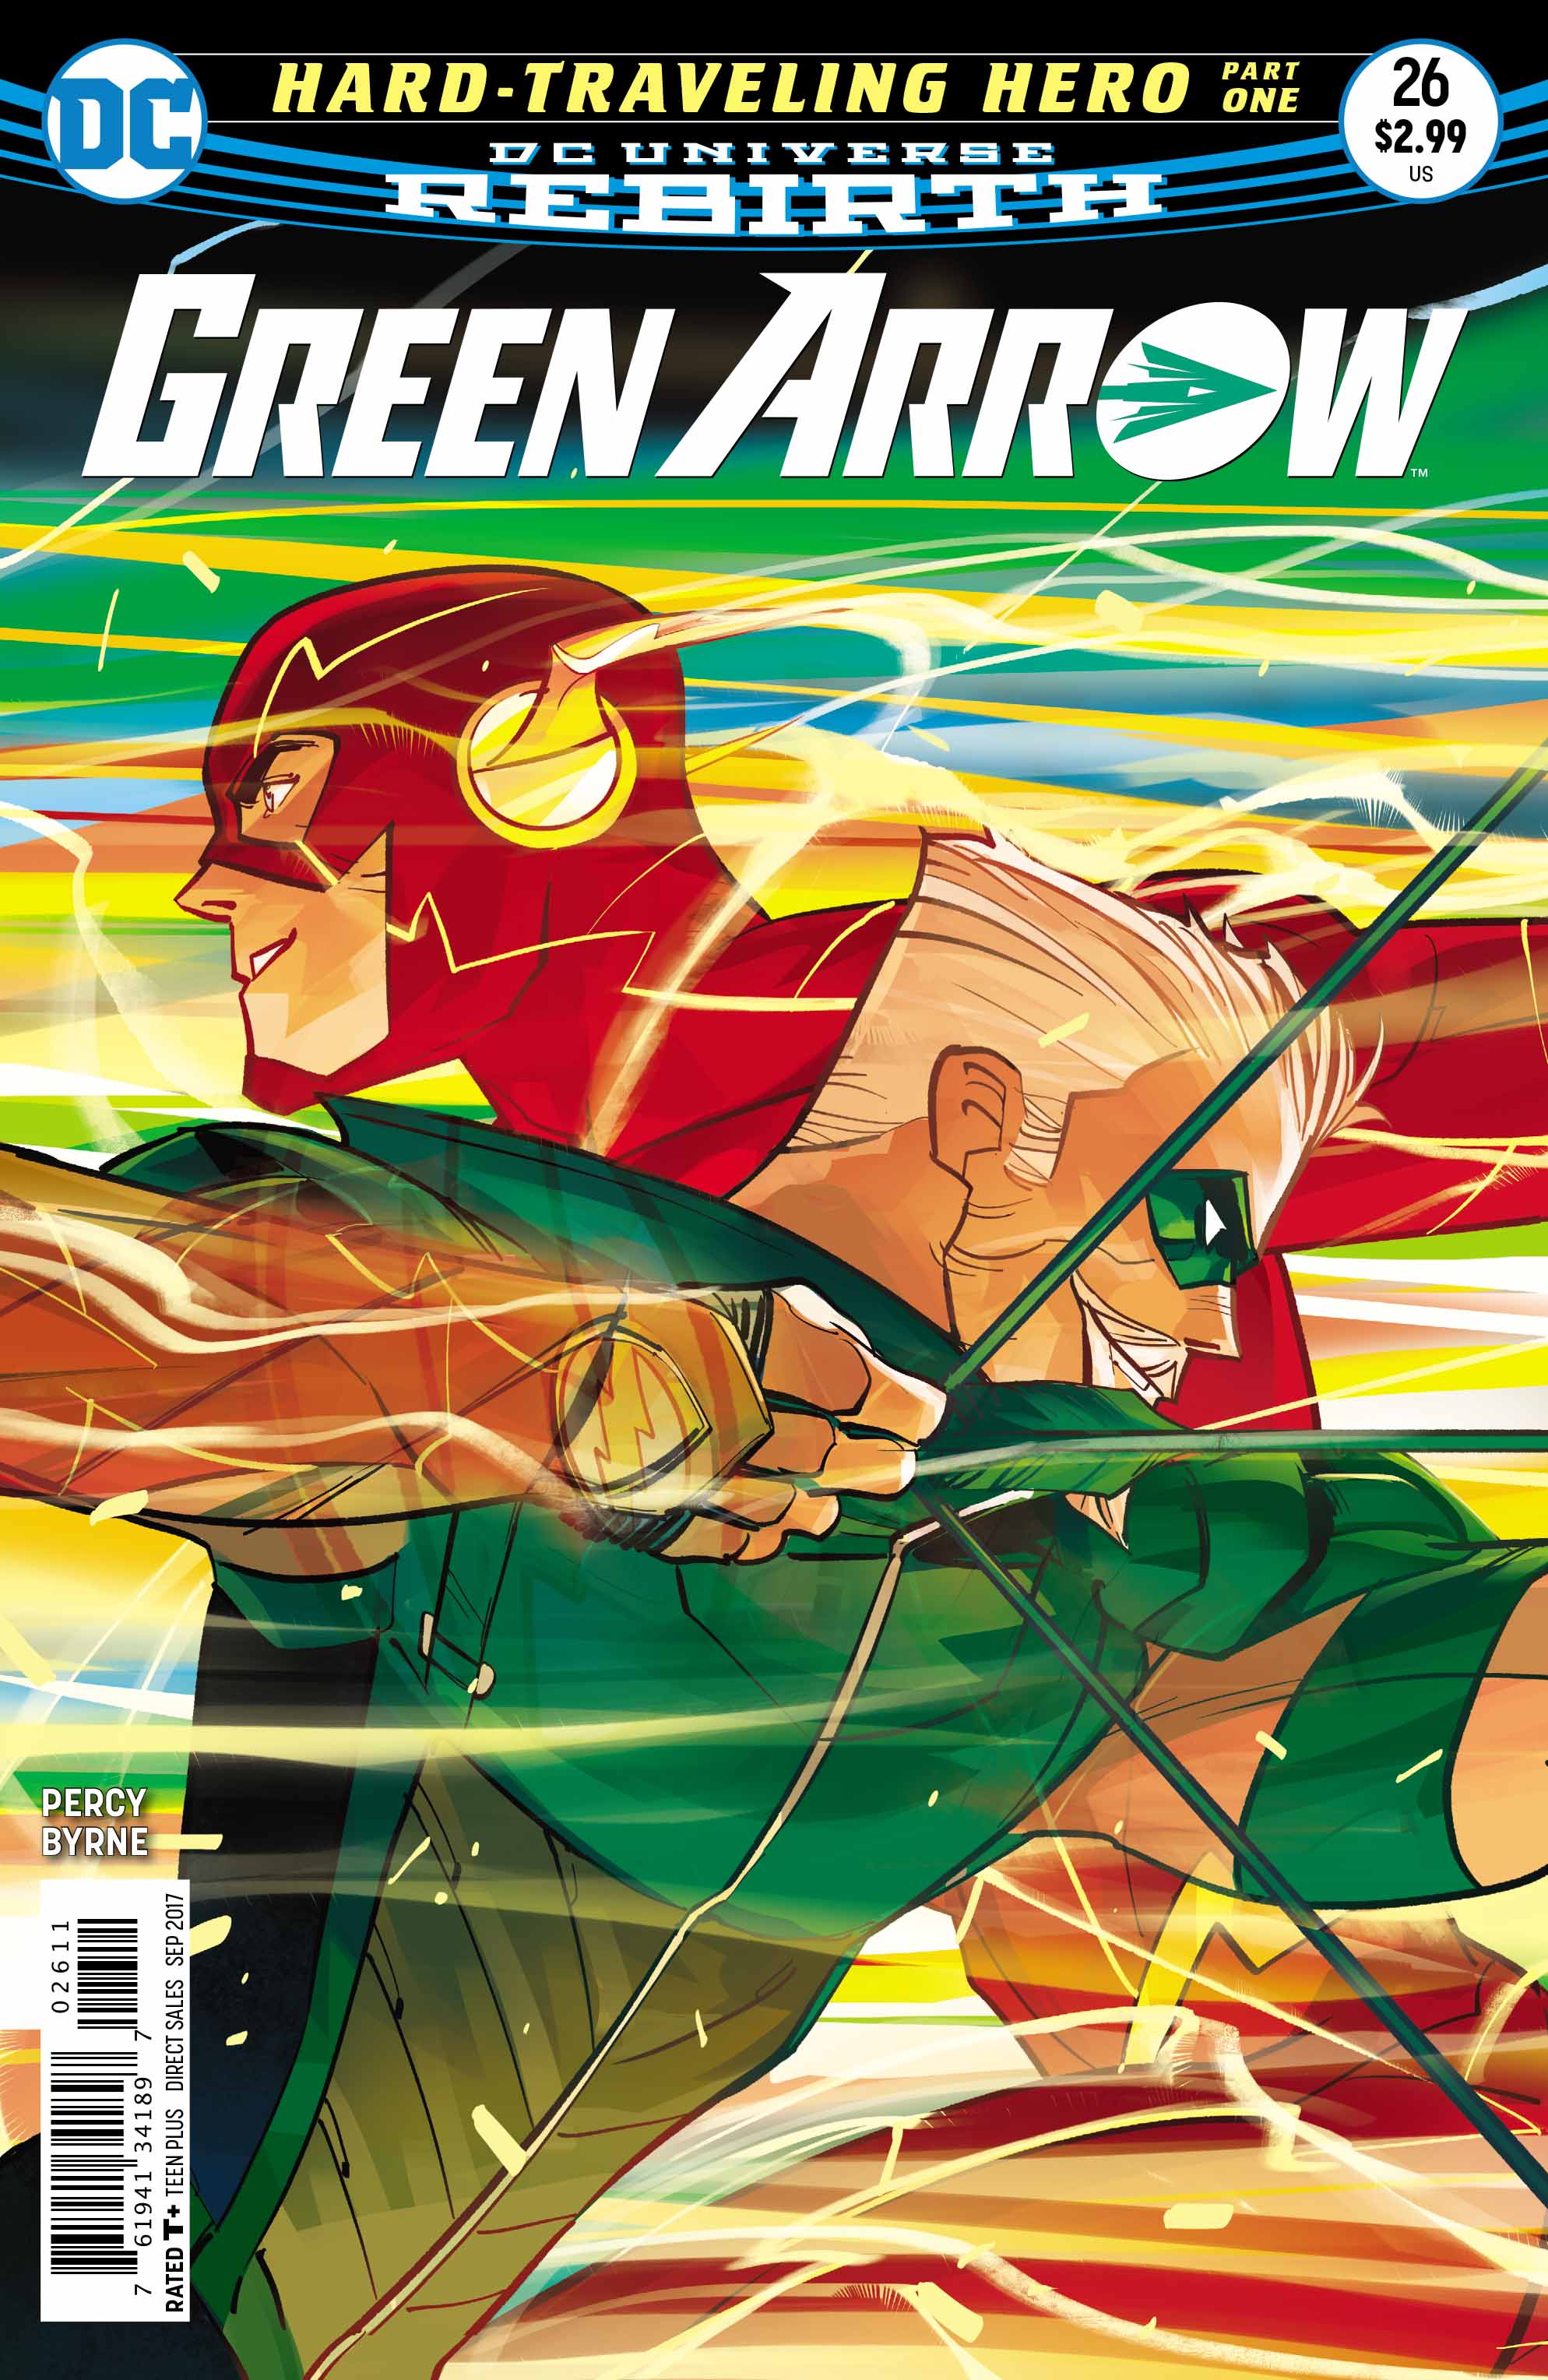 Green Arrow #26 review